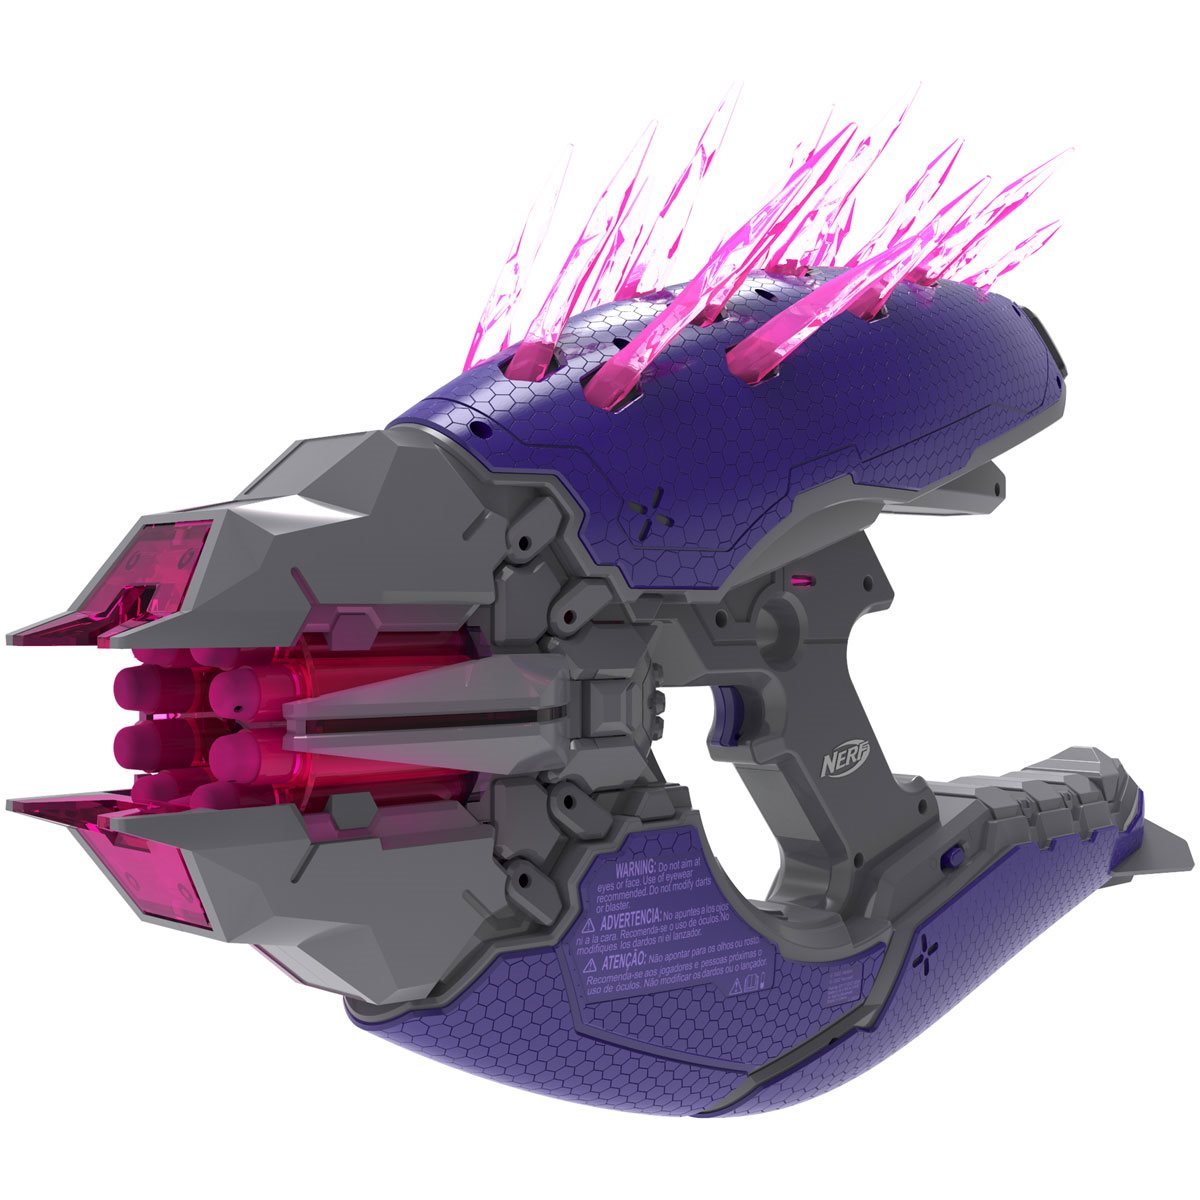 Buy Nerf Halo Mangler Blaster from Hasbro